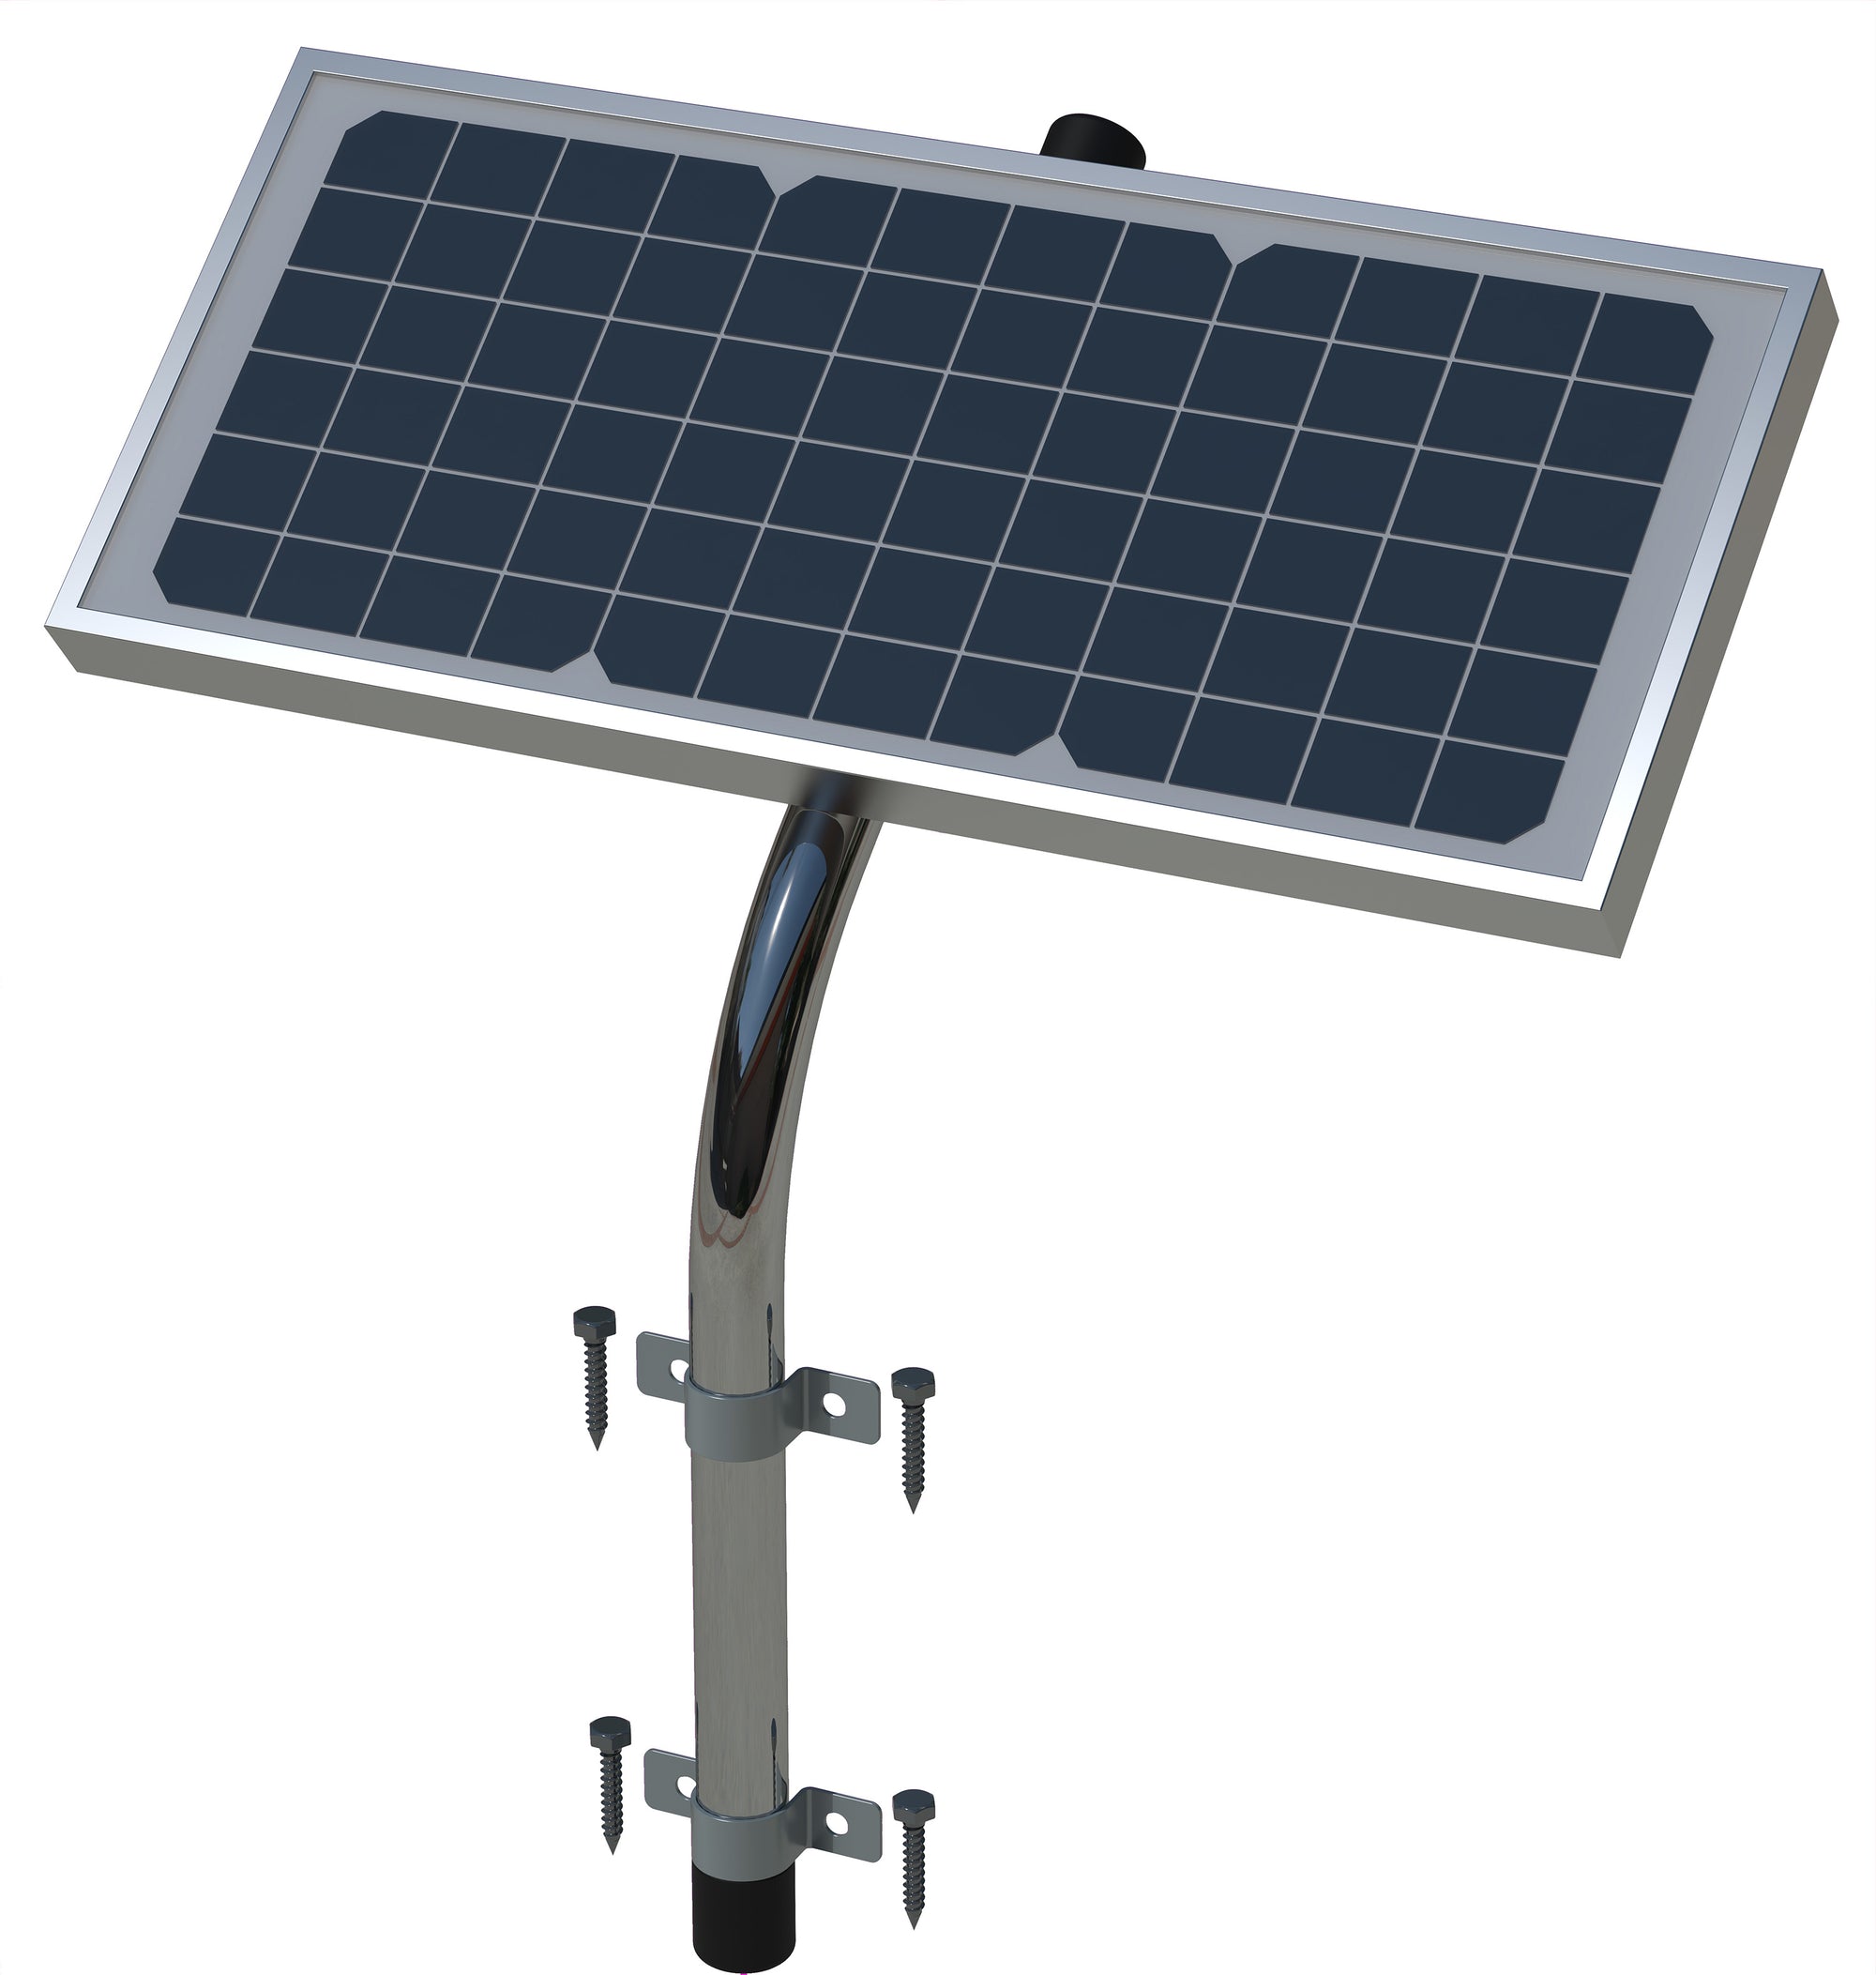 AXDP Ghost Controls 10 Watt Monocrystalline Solar Panel for Driveway Gates and Solar recharging